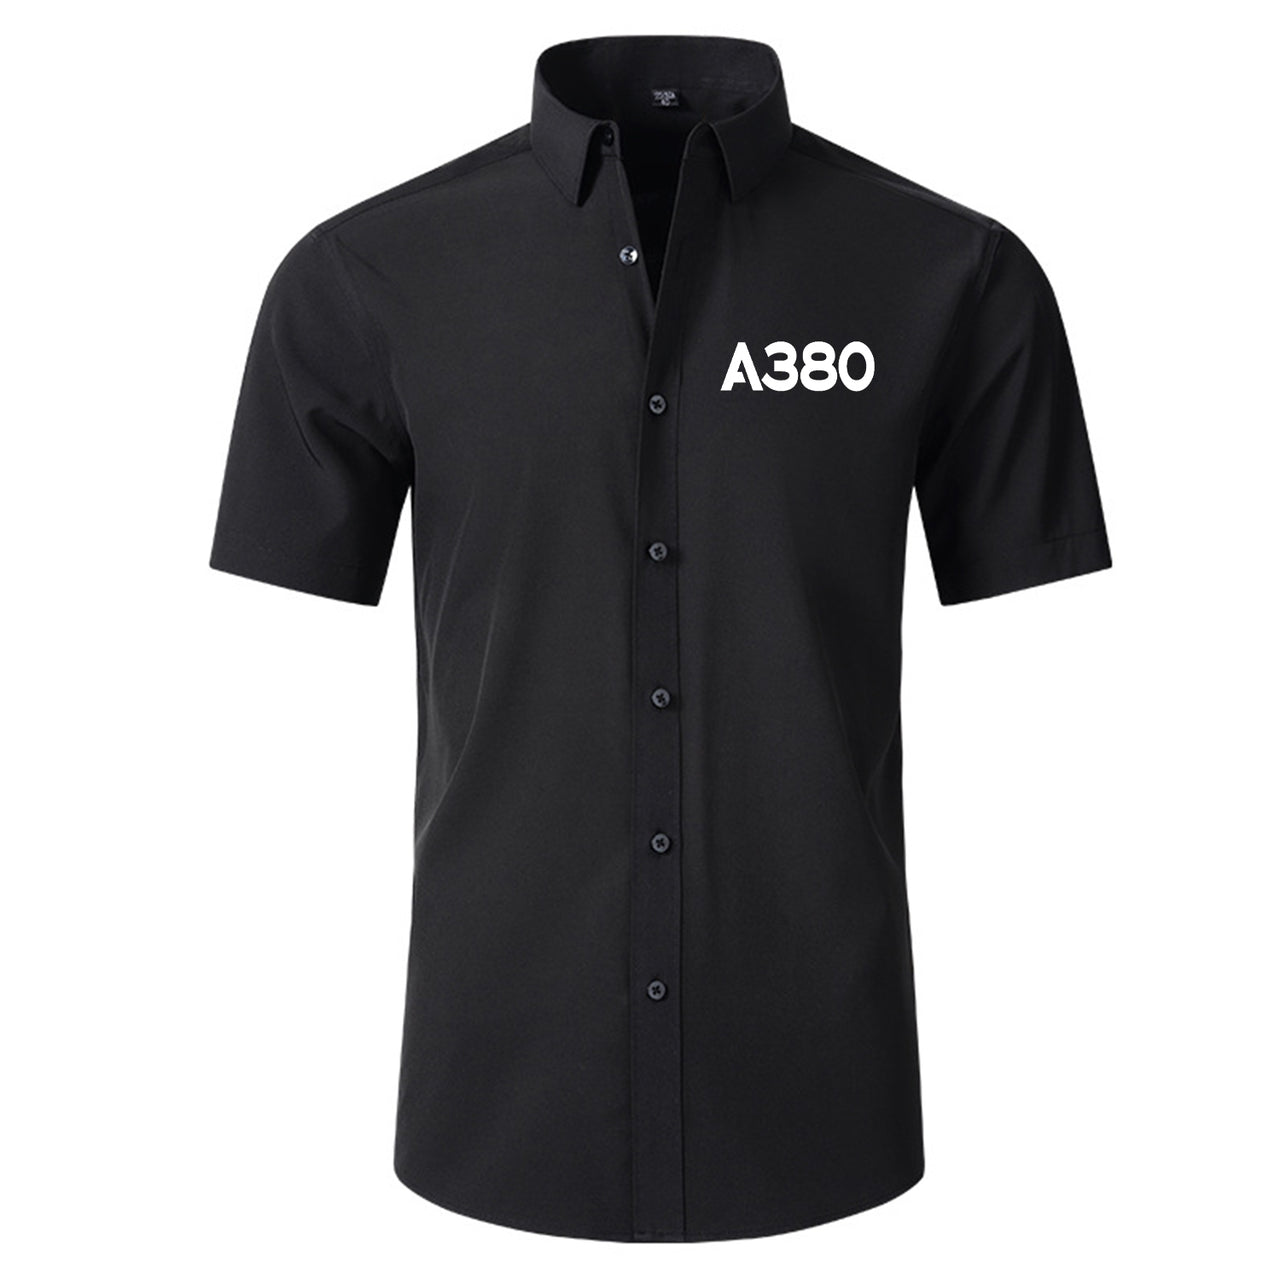 A380 Flat Text Designed Short Sleeve Shirts